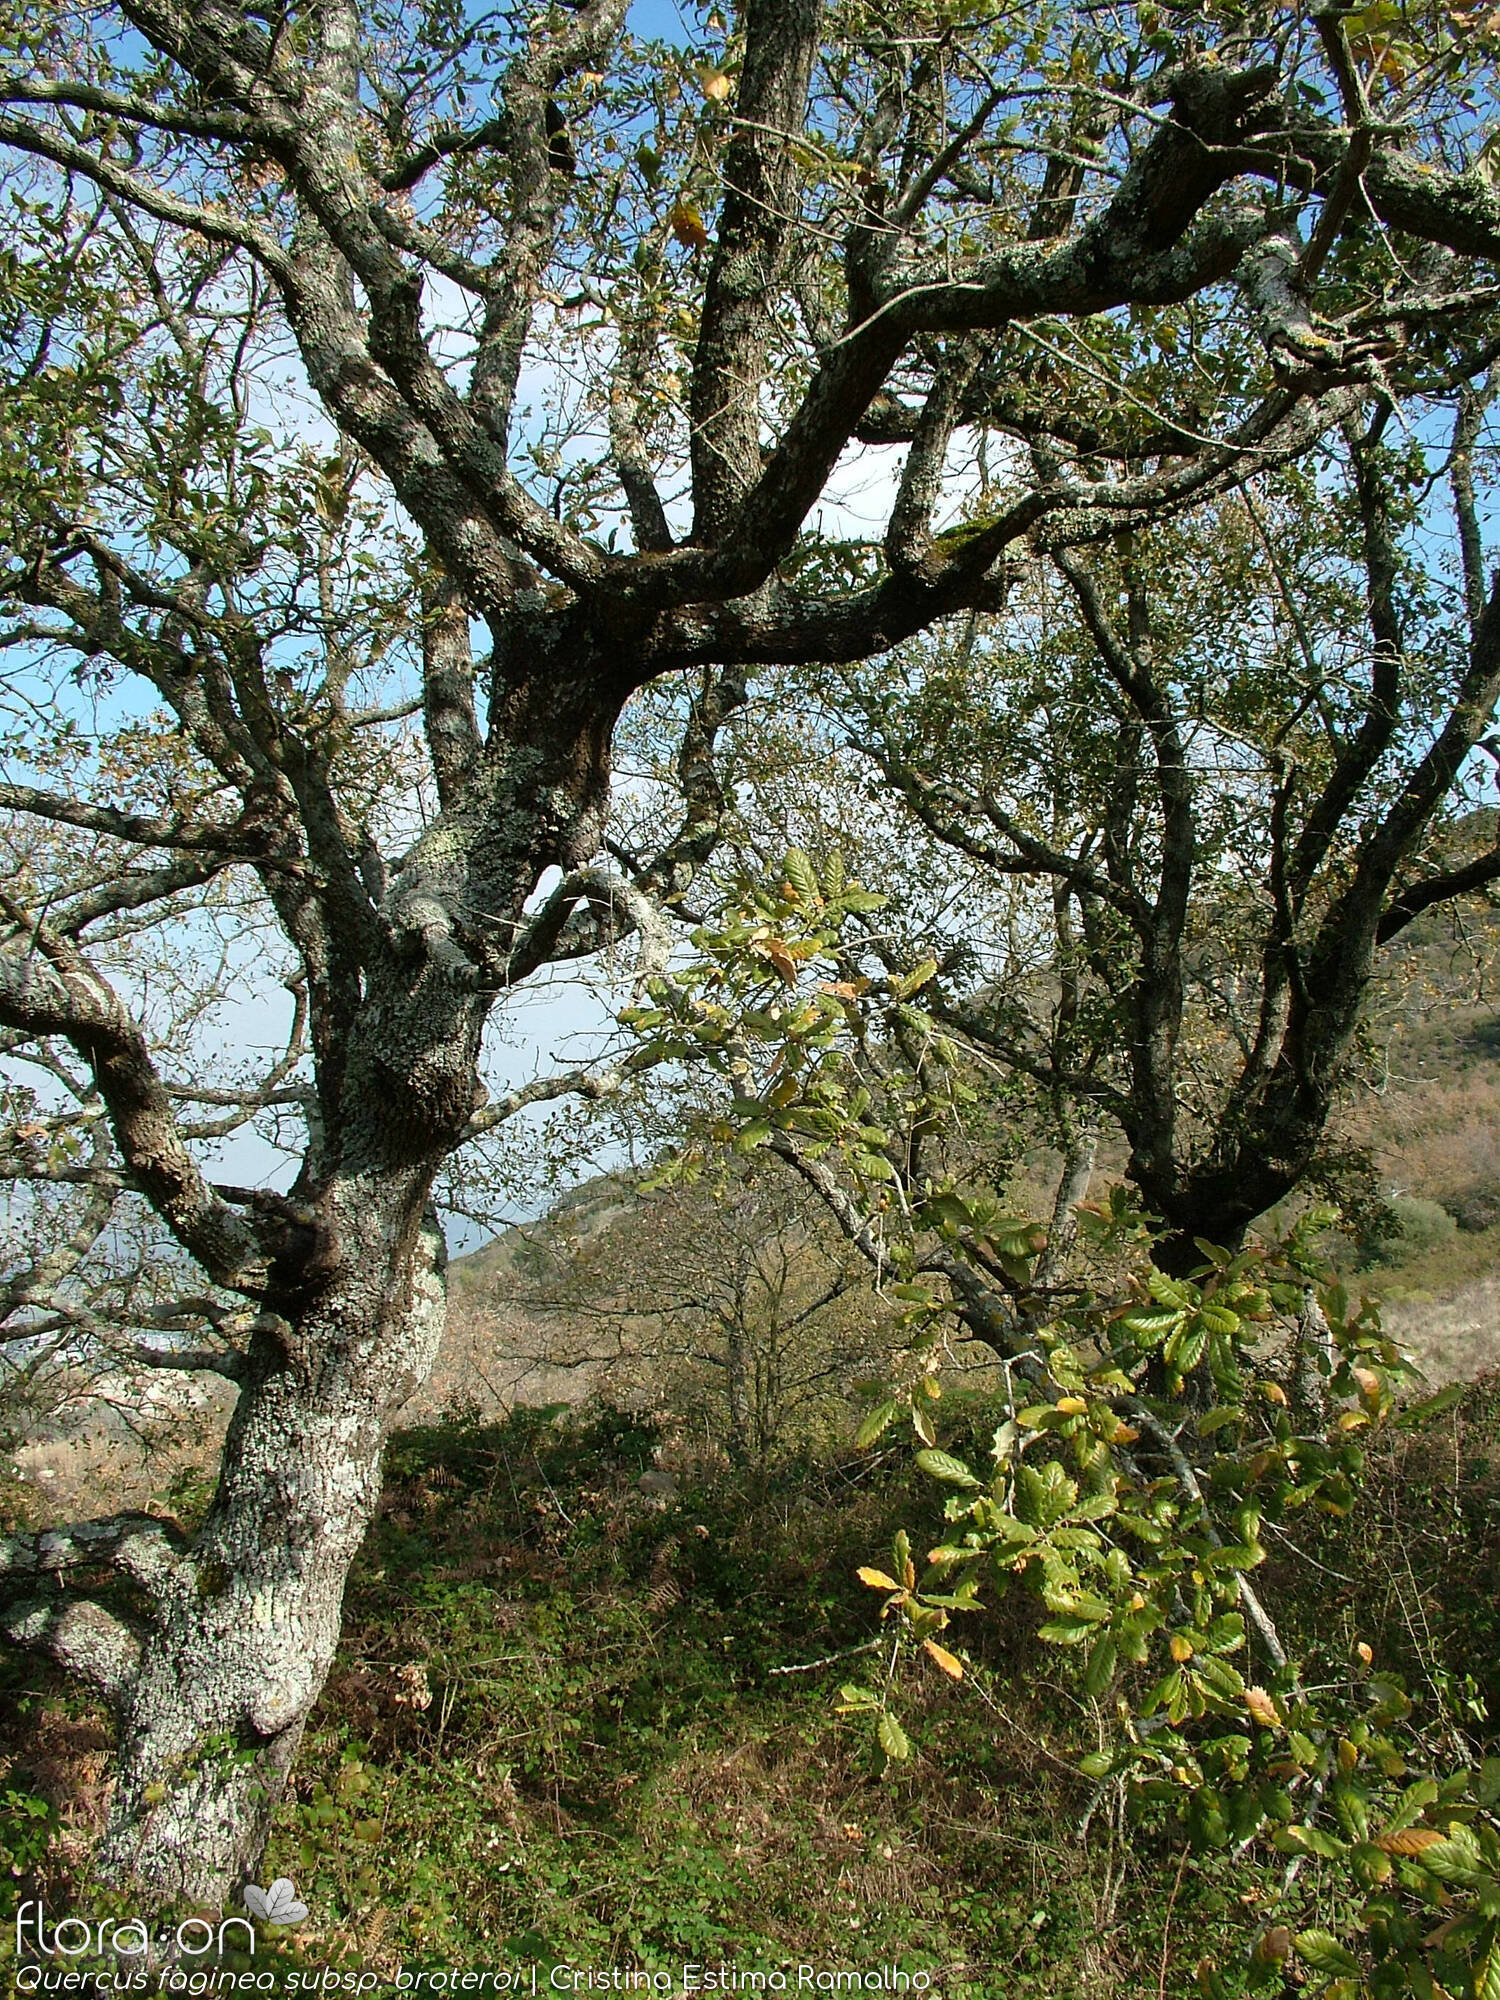 Quercus faginea - Hábito | Cristina Estima Ramalho; CC BY-NC 4.0